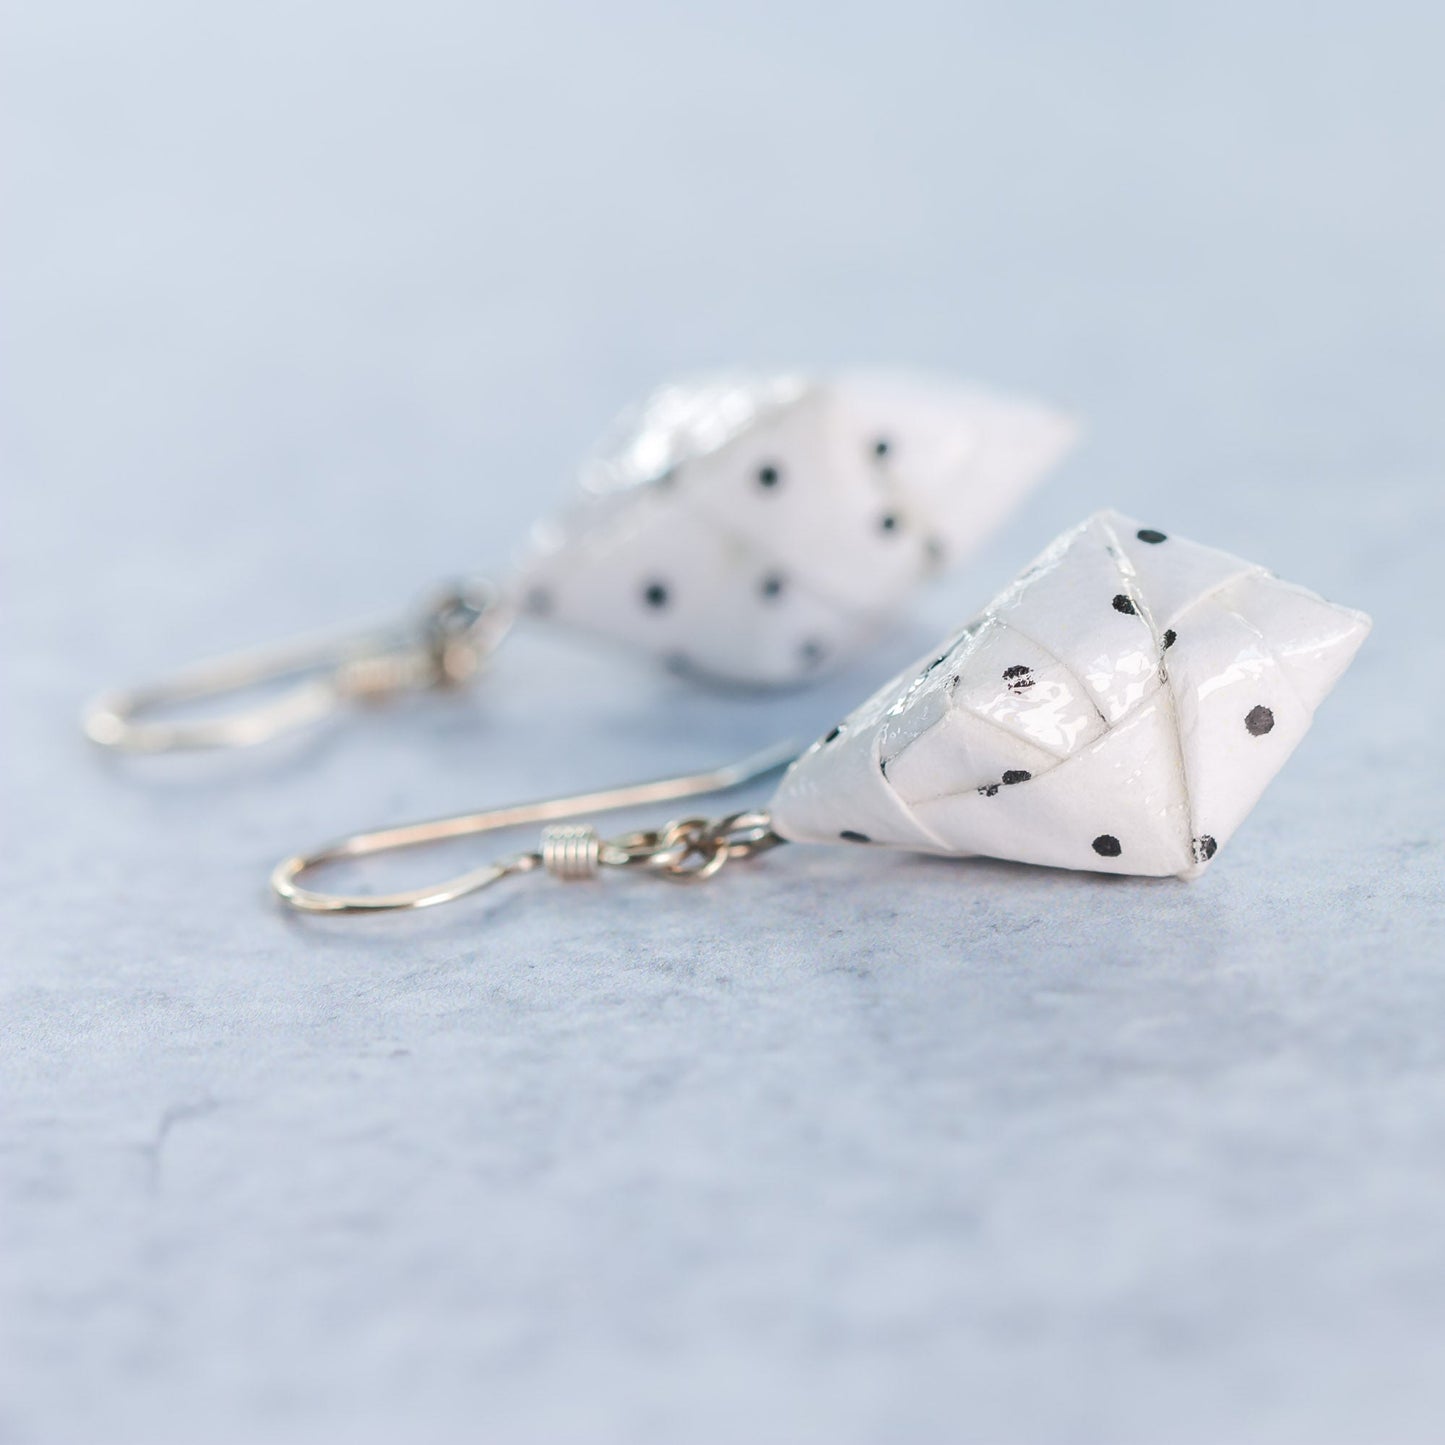 Origami Diamond Paper Earrings - Polka Dot - By LeeMo Designs in Bend, Oregon